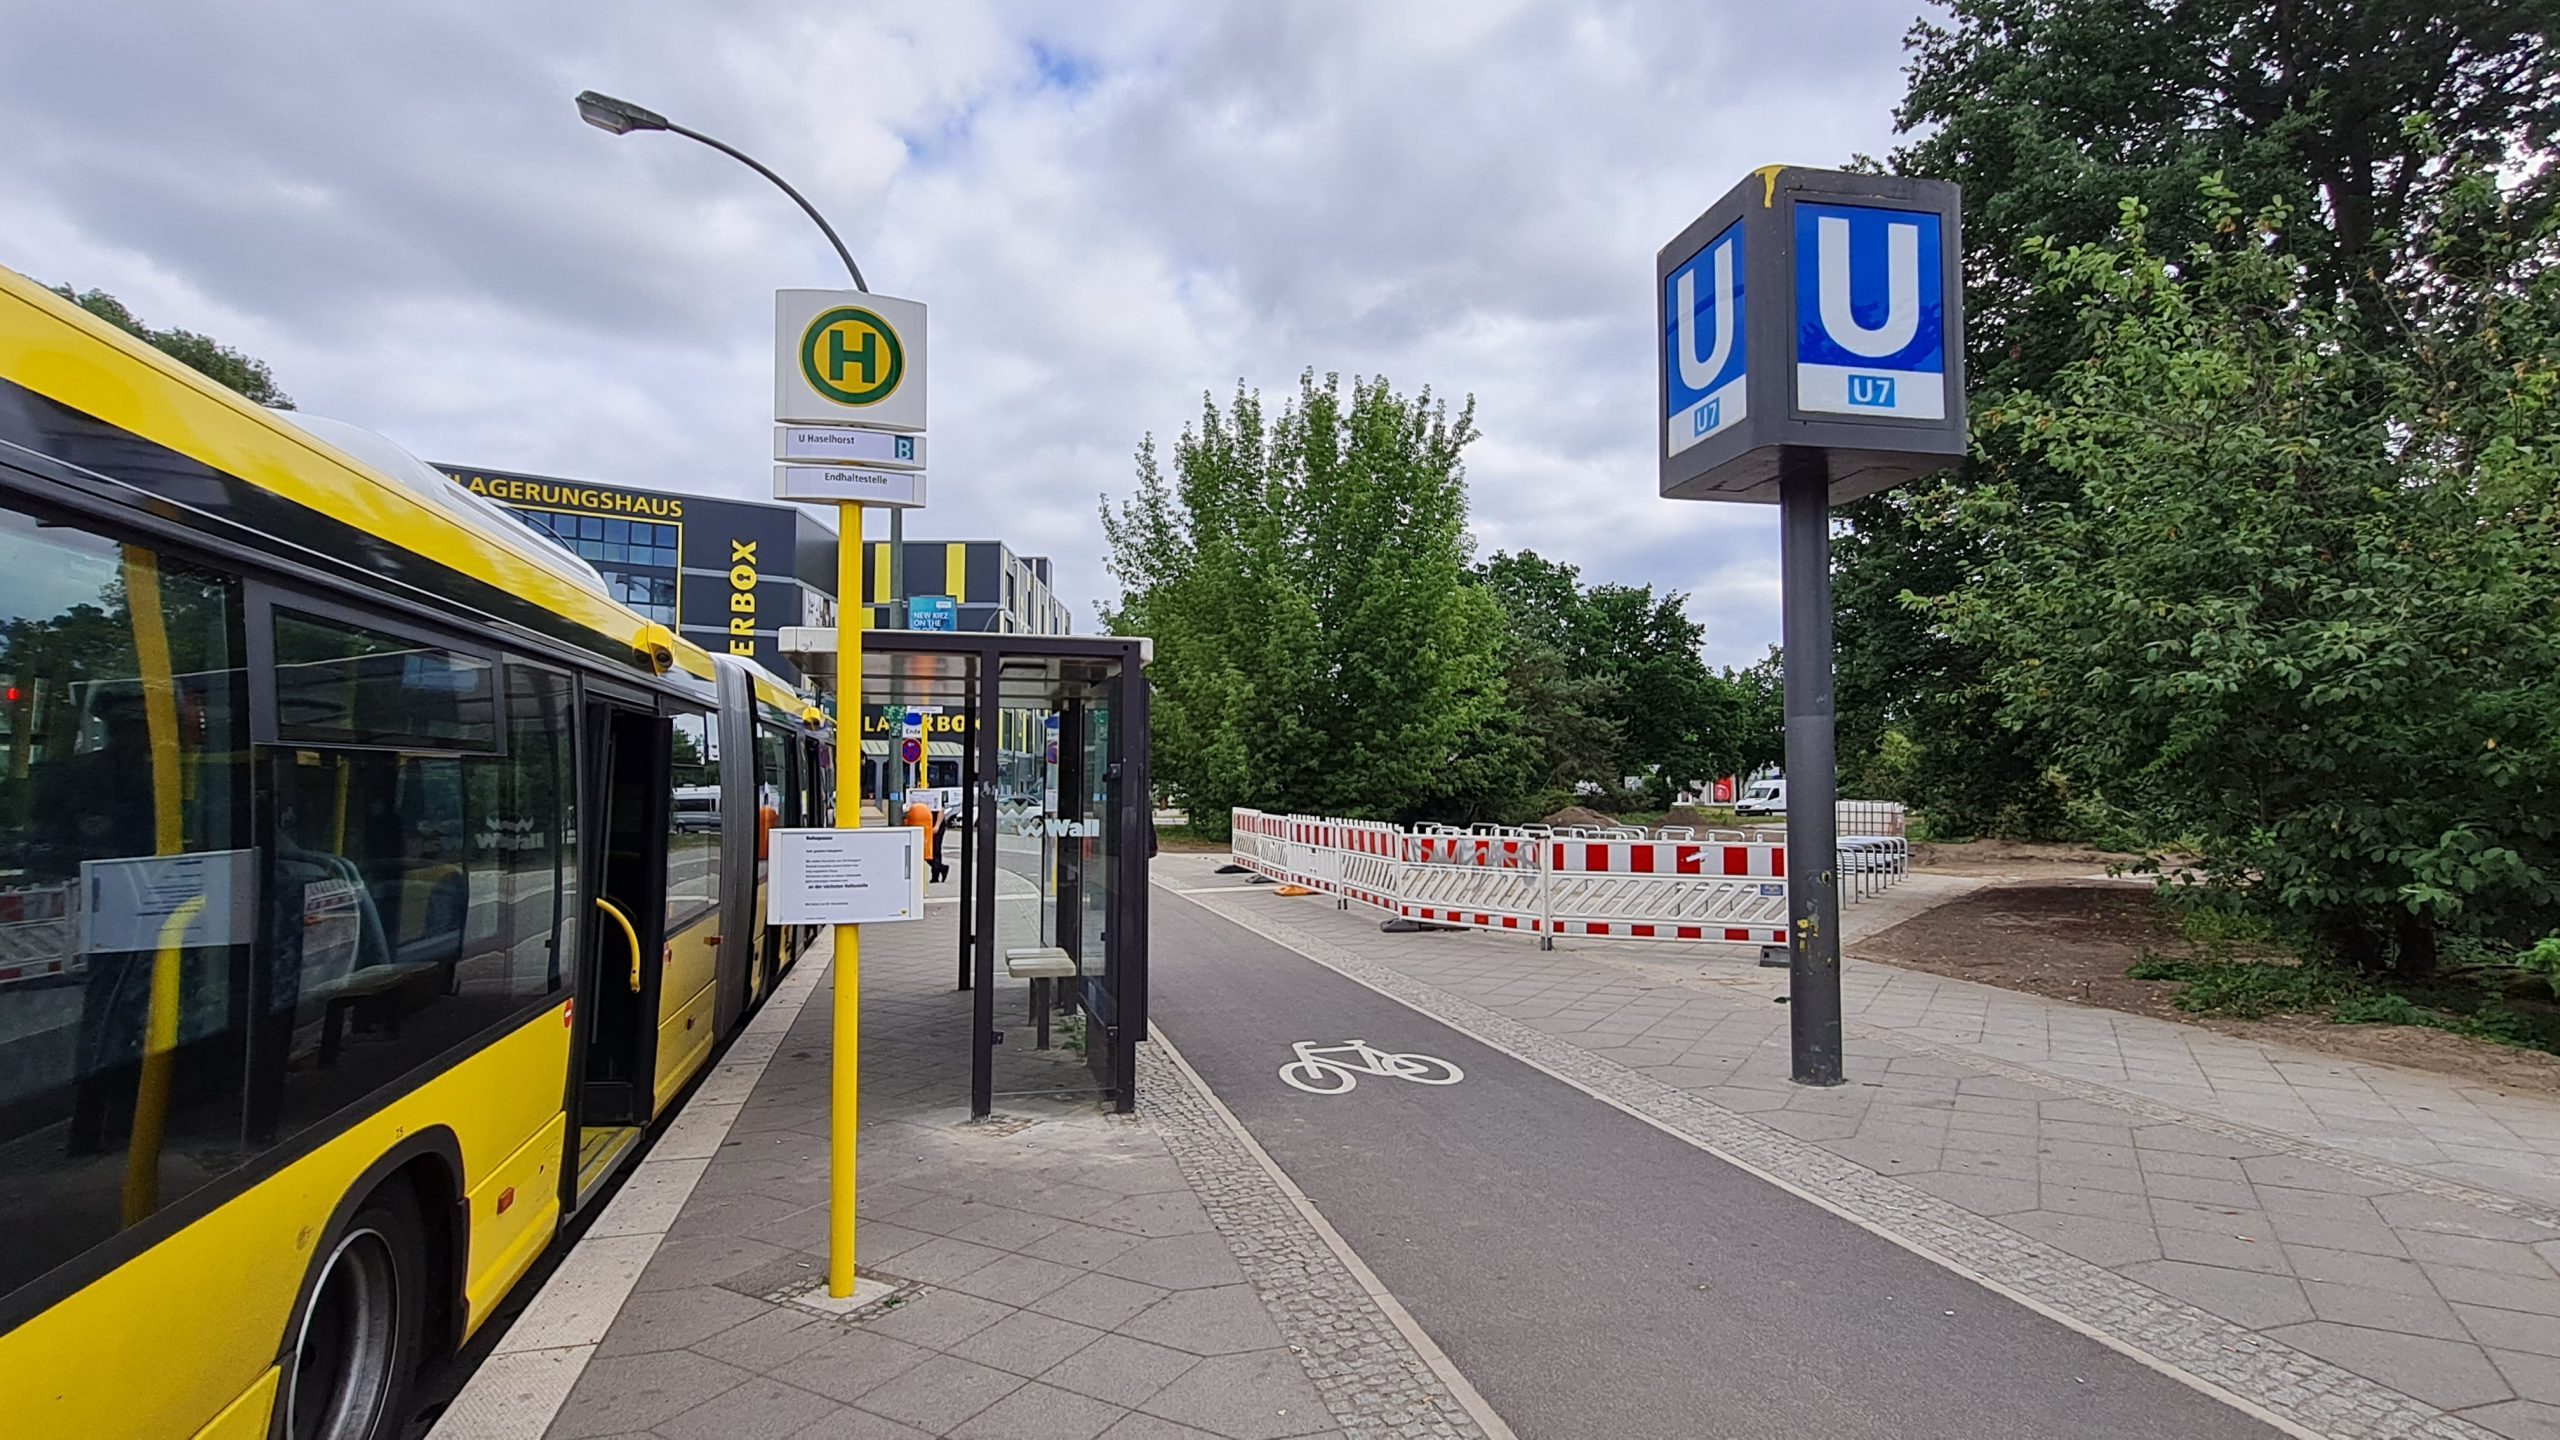 Spandau fördert den Umweltverbund: Neue Fahrradabstellanlage am U-Bahnhof Haselhorst